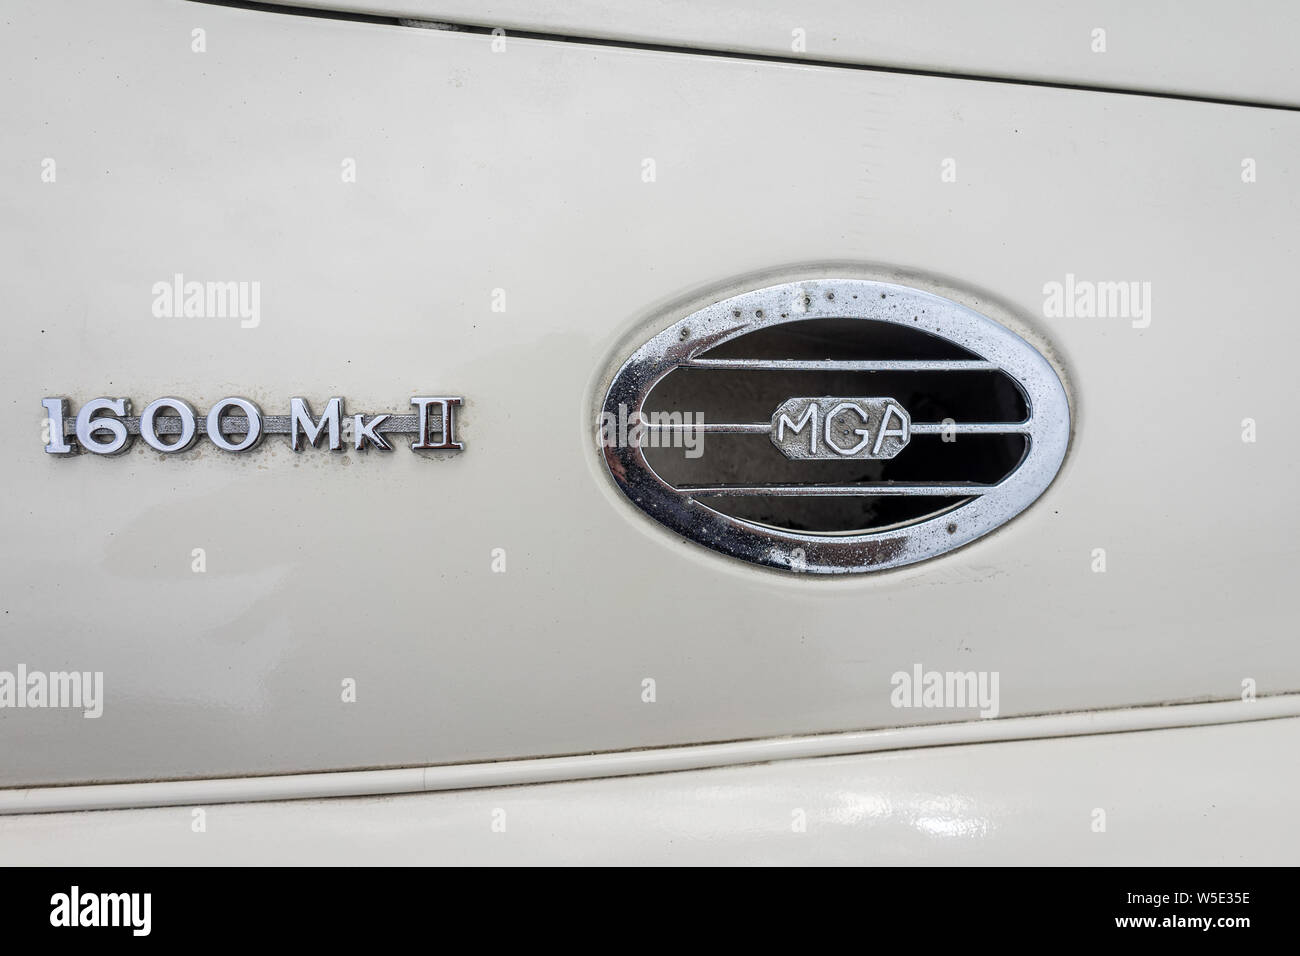 PAAREN IM GLIEN, Germania - Giugno 08, 2019: emblema og sports cars mg a 1600 Mark II, close-up. Die Oldtimer Show 2019. Foto Stock